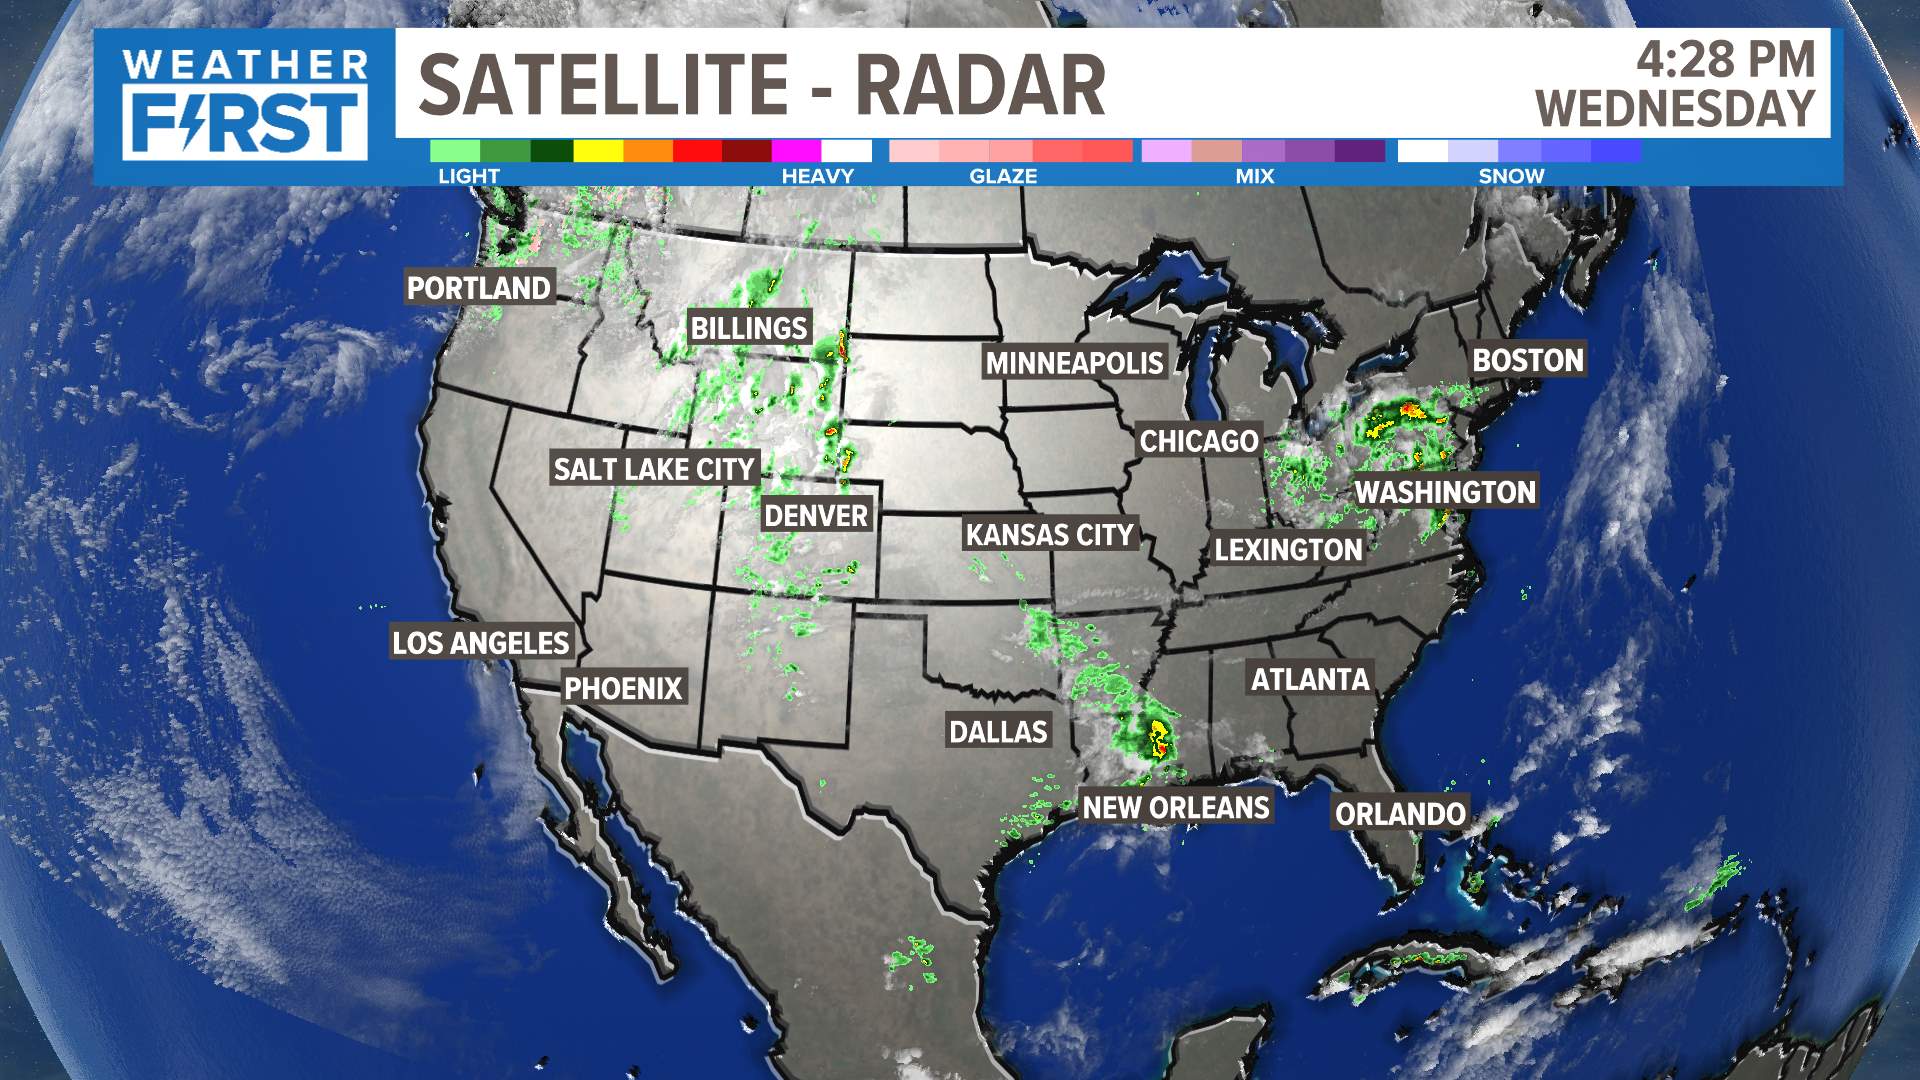 St. Louis Weather, Doppler Radar, Forecast, Conditions | www.waldenwongart.com